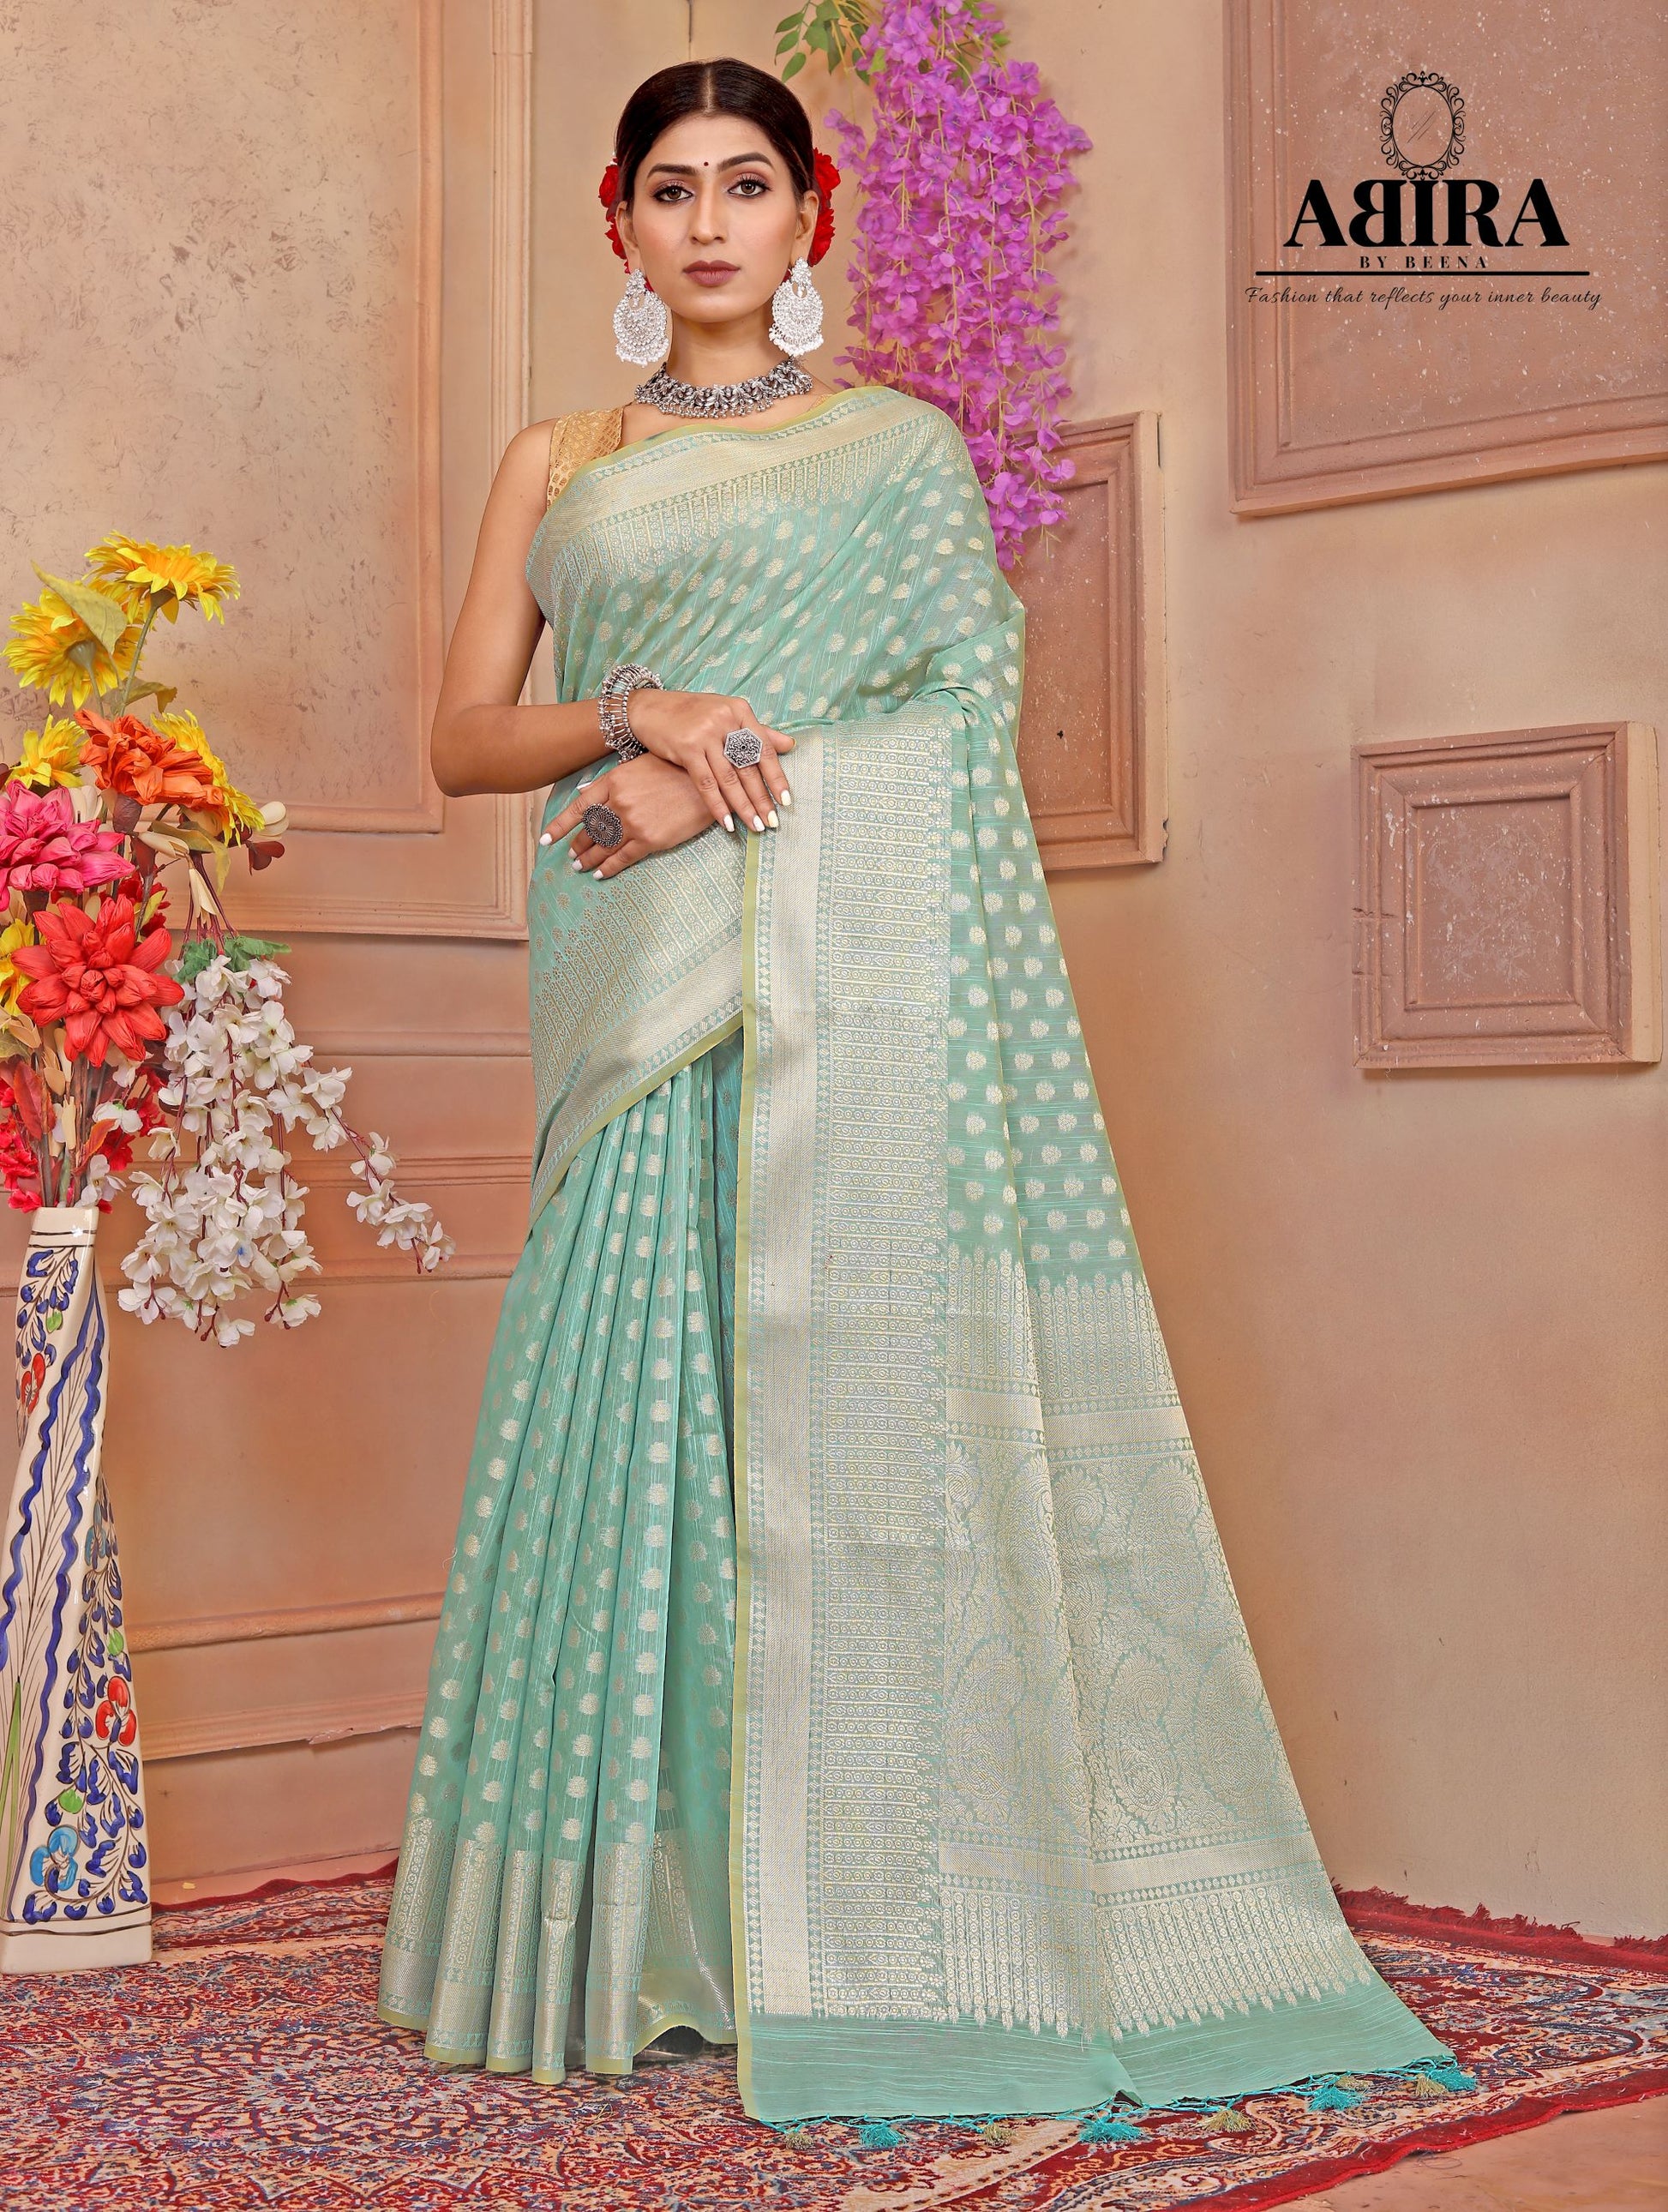 Turquoise Blue Banaras Cotton Silk - AbirabyBeena